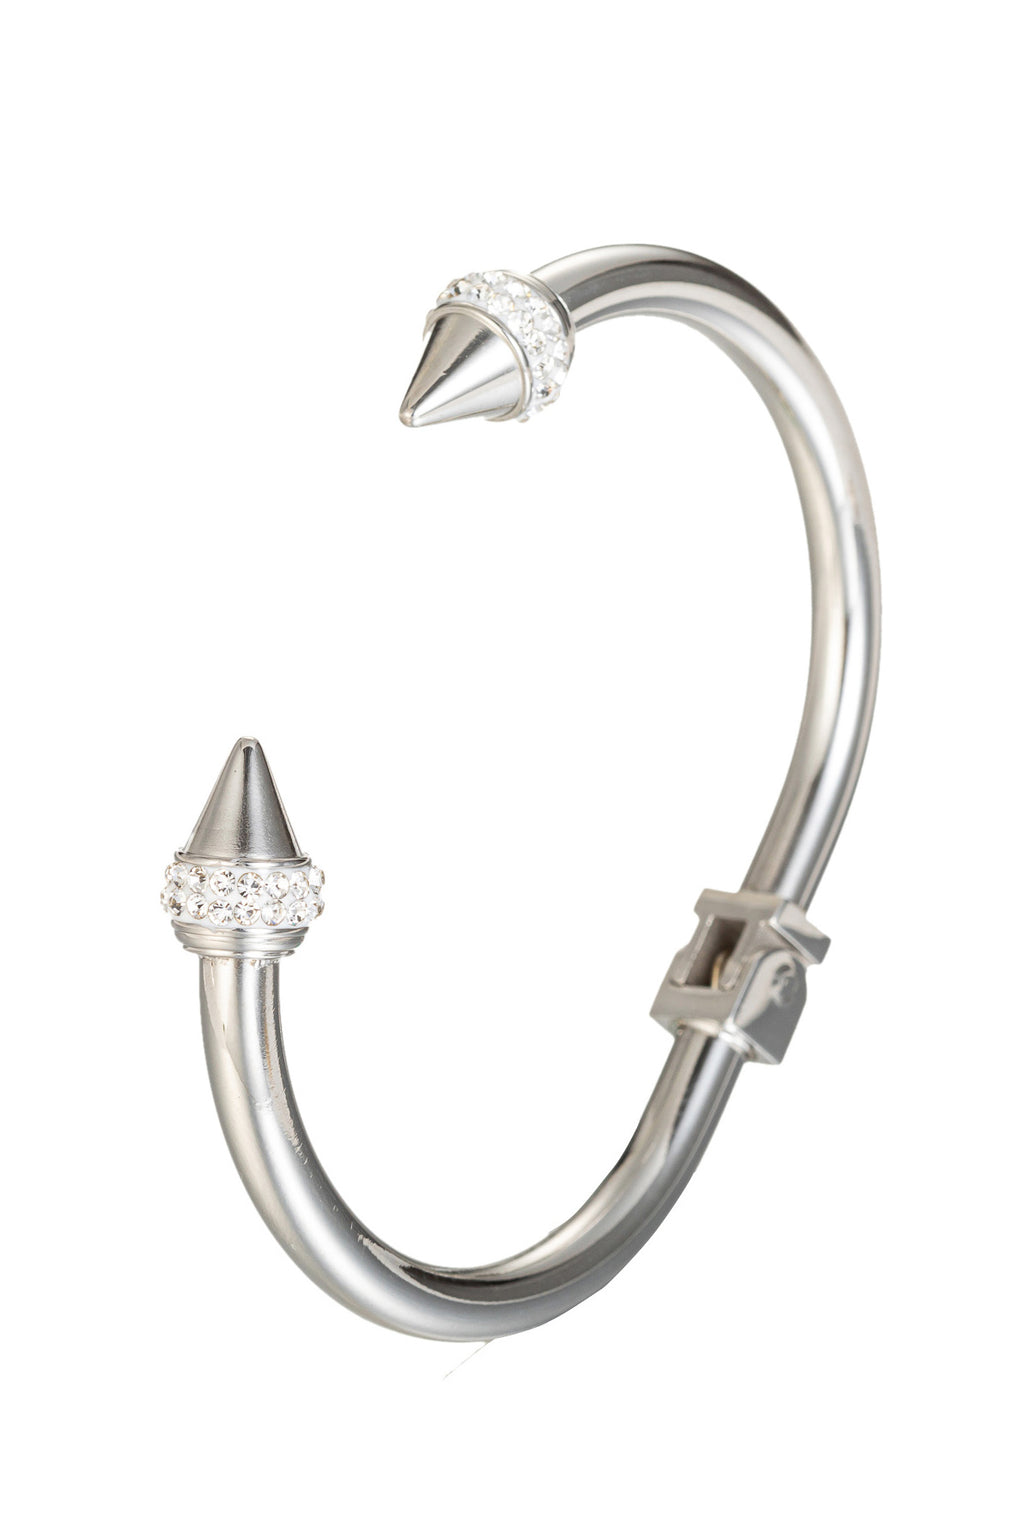 Titanium cuff bracelet studded with CZ crystals.